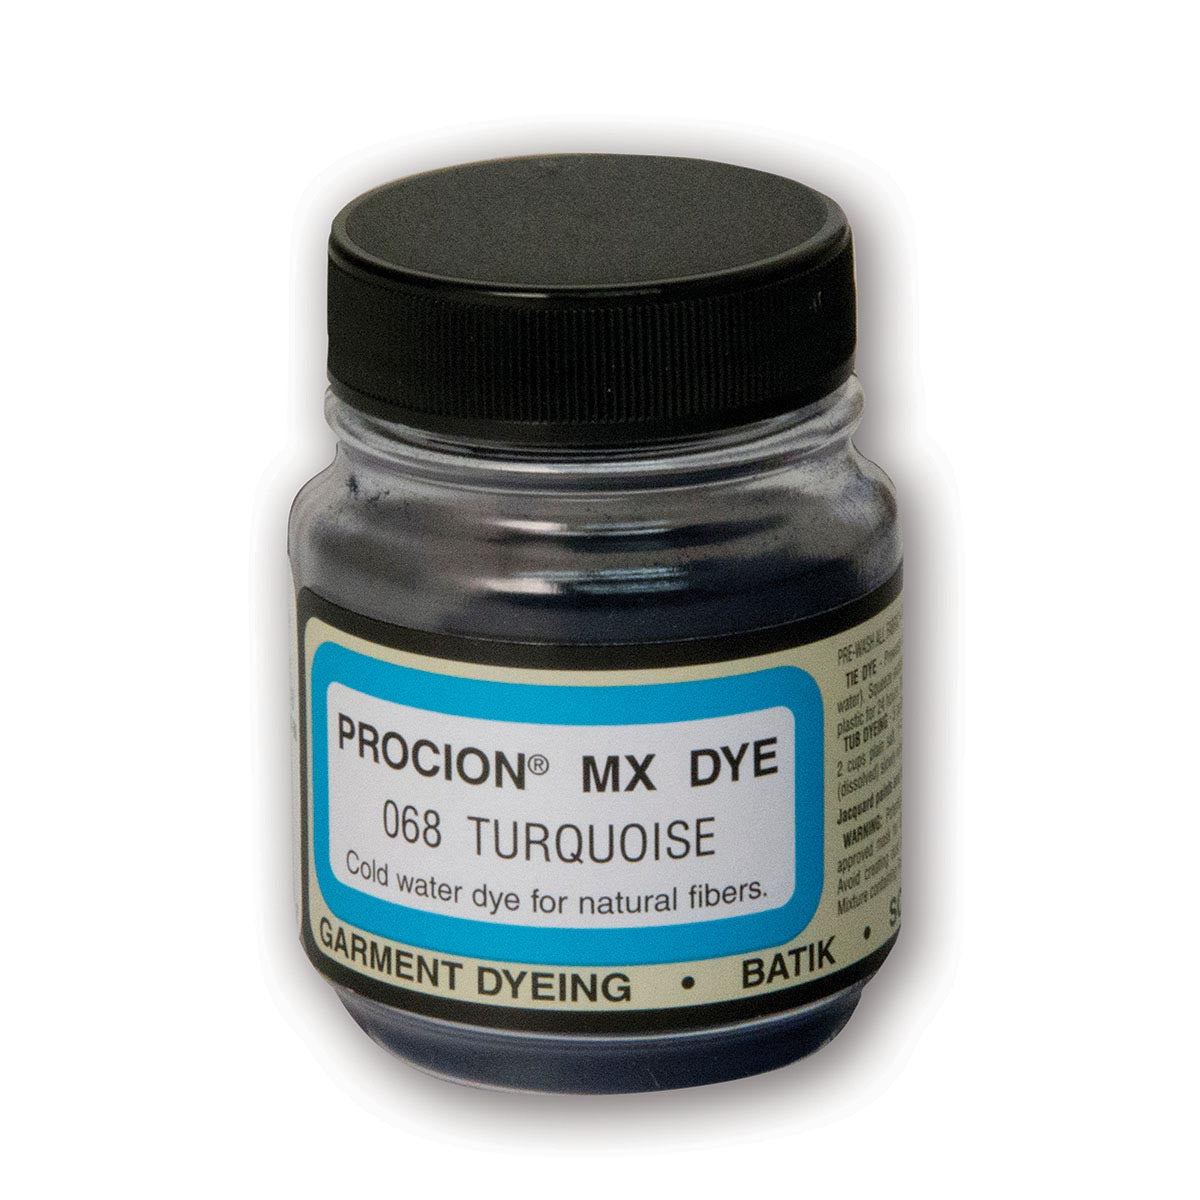 Jacquard - Procion MX Dye - Tissu Textile - Turquoise 068